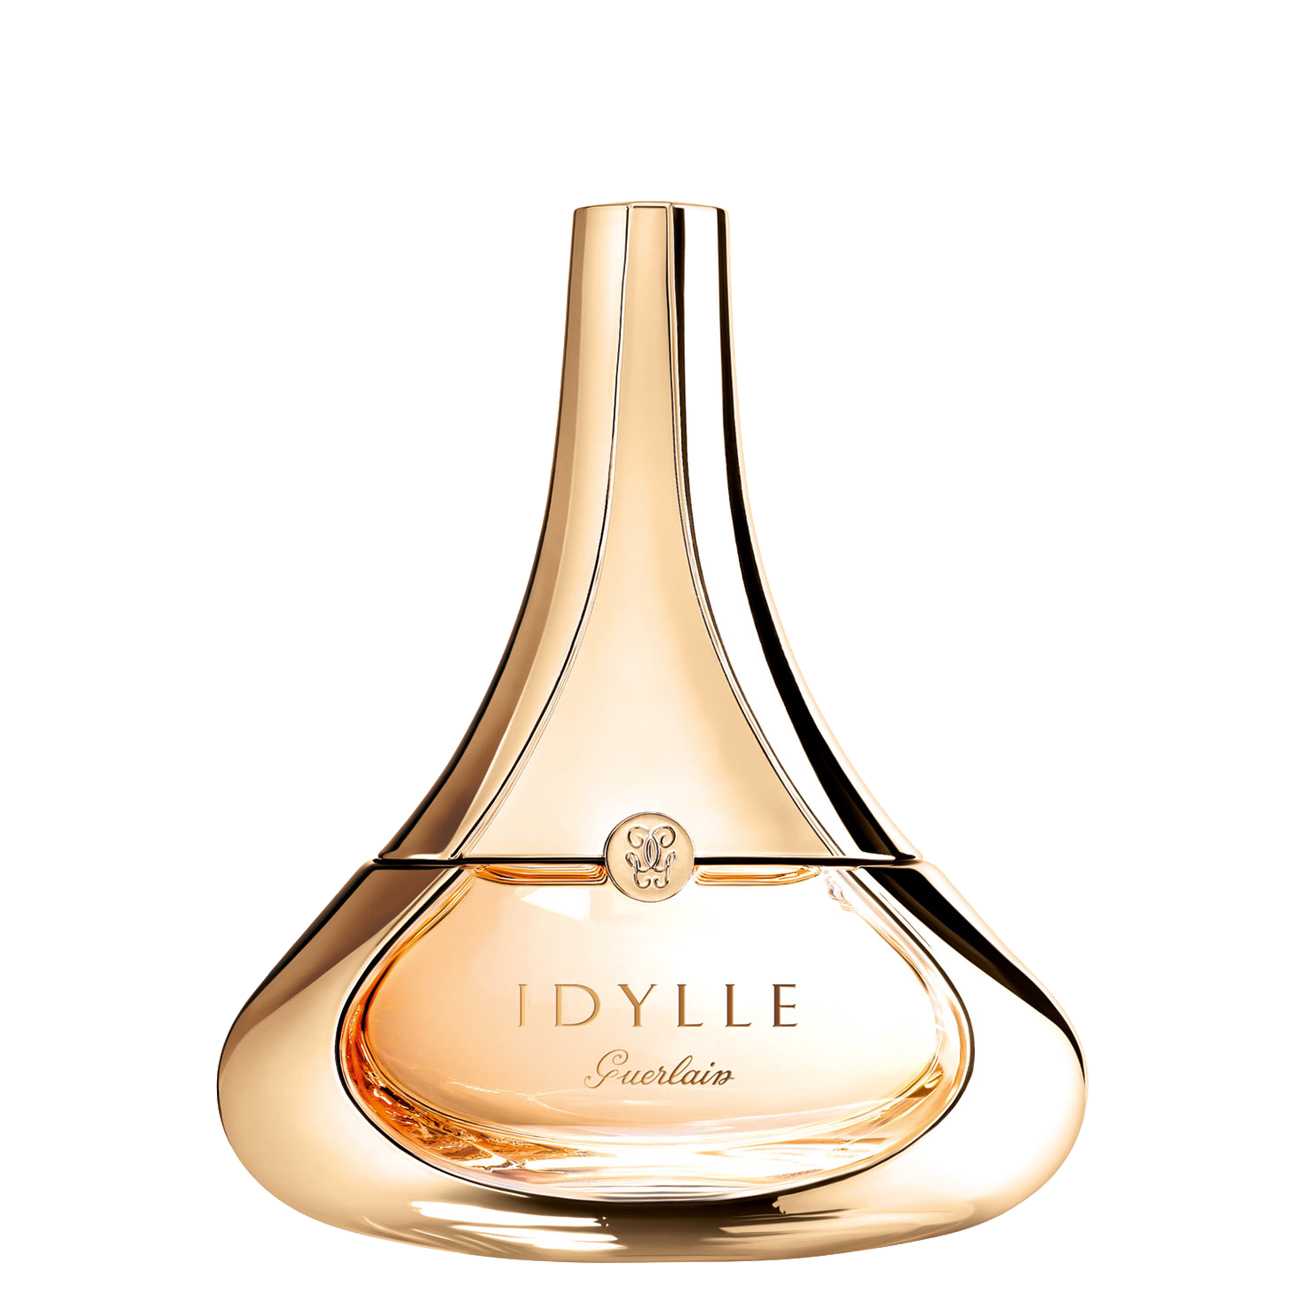 Apa de Parfum Guerlain IDYLLE 50ml cu comanda online